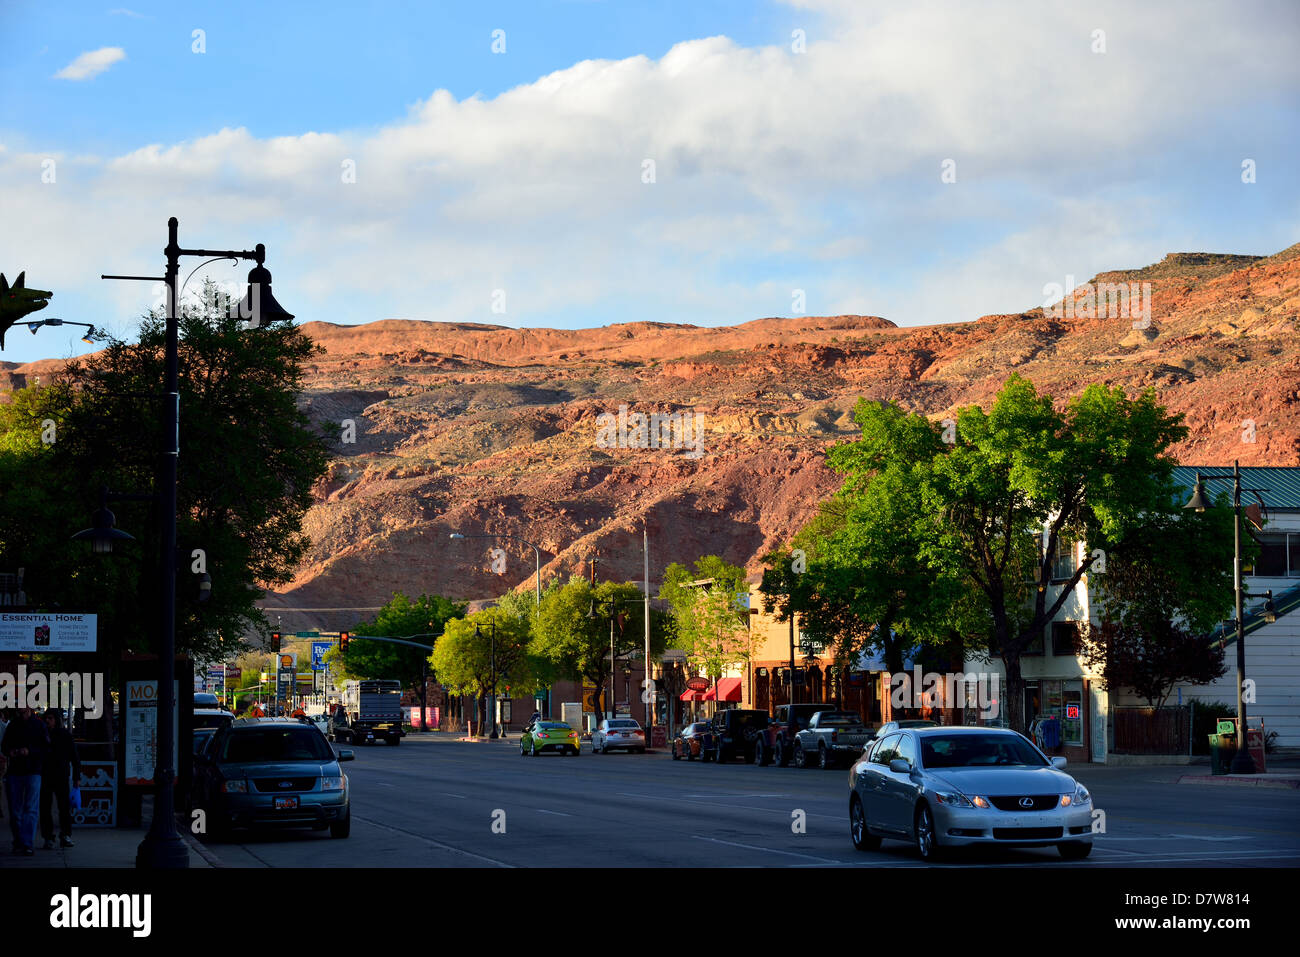 La firma acantilados de arenisca roja, cerca de la ciudad de Moab, Utah, EE.UU.. Foto de stock